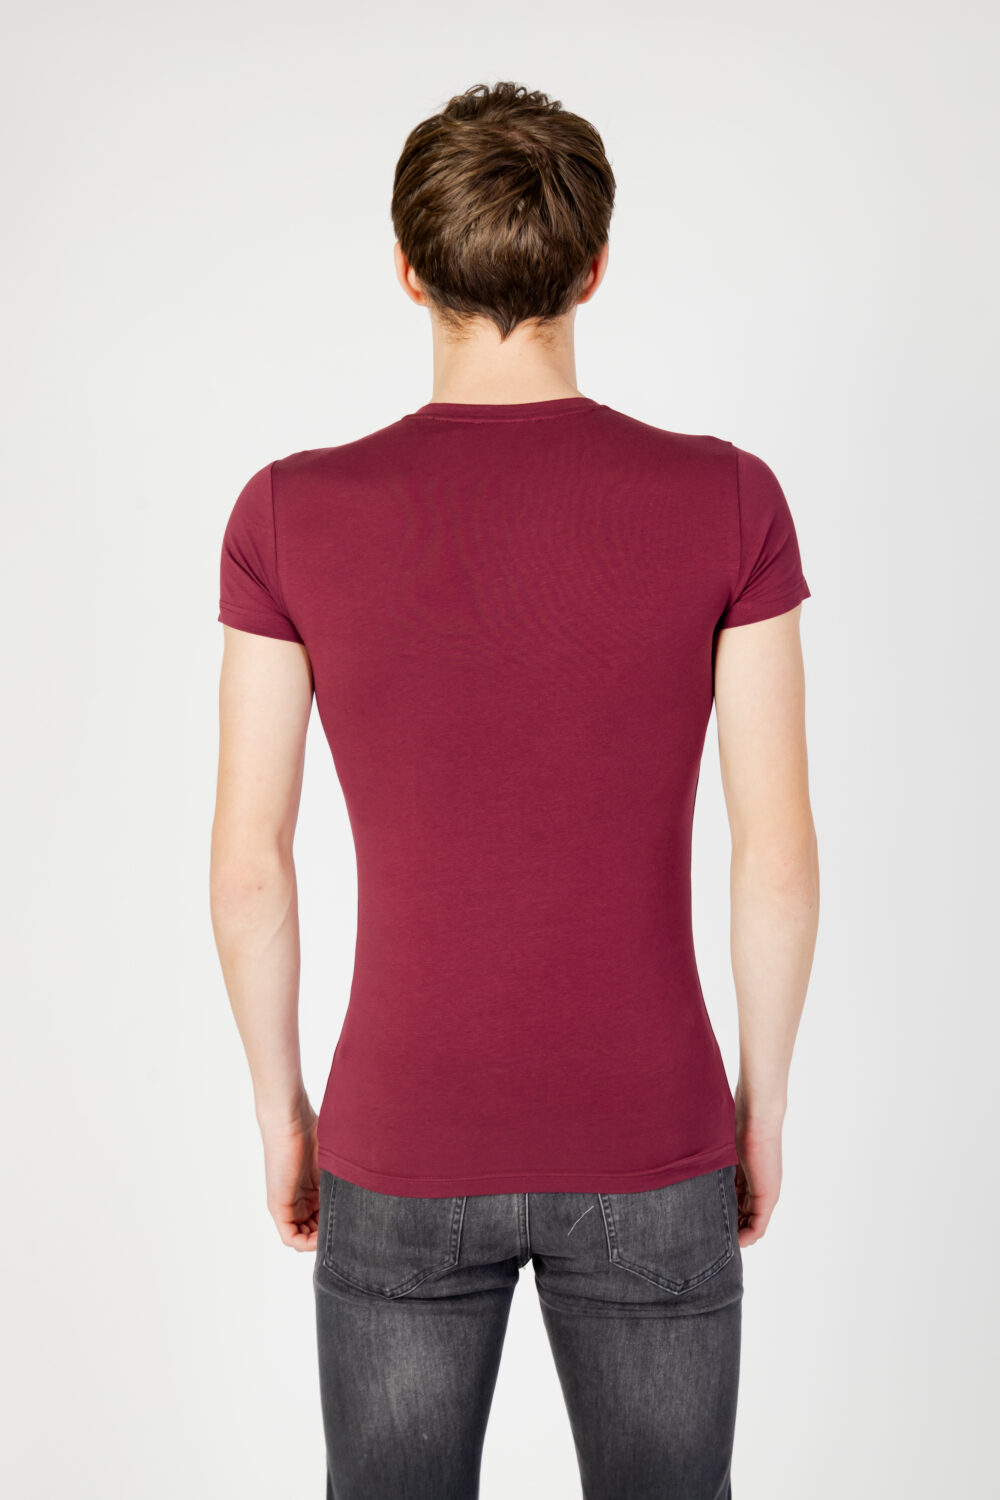 T-shirt intimo Emporio Armani Underwear crew neck s/sleeve Bordeaux - Foto 3